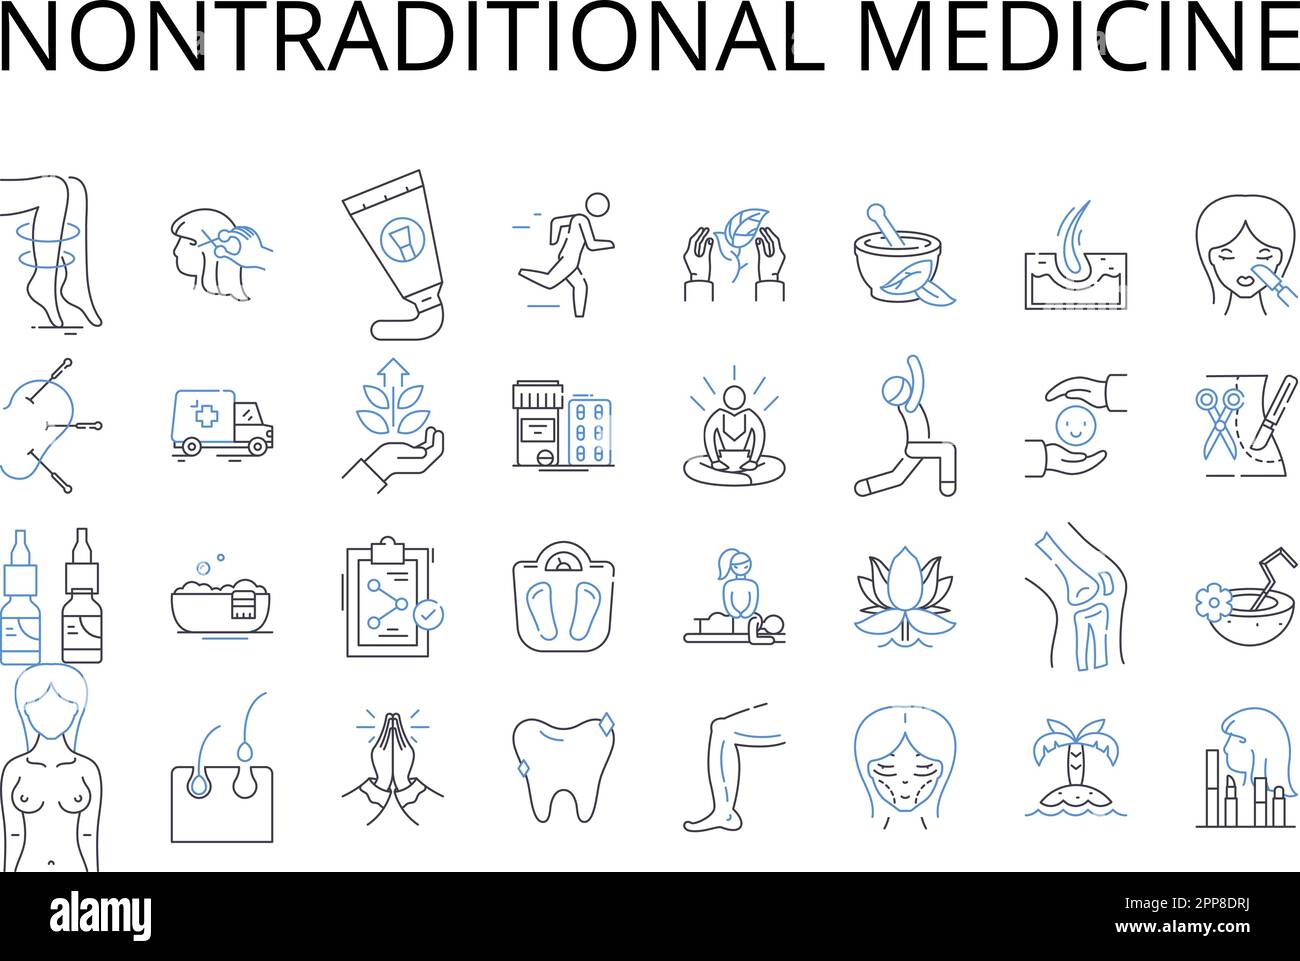 Nontraditional medicine line icons collection. Alternative medicine, Complementary medicine, Holistic medicine, Integrative medicine, Naturopathy Stock Vector